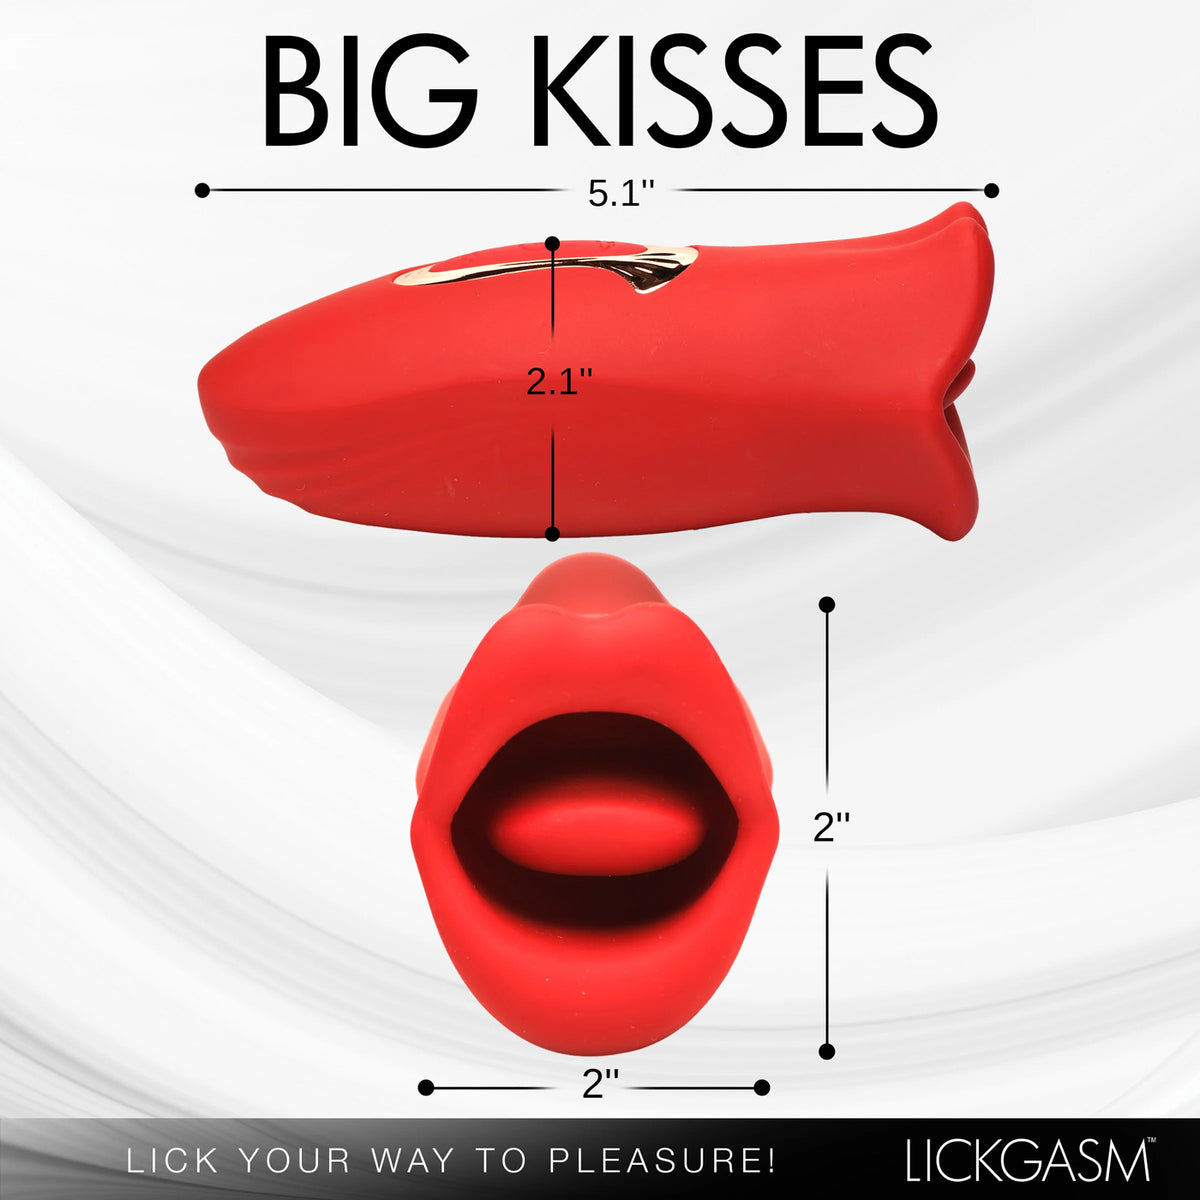 Lickgasm Kiss and Tell Mini Kissing and Vibrating  Clitoral Stimulator - Red